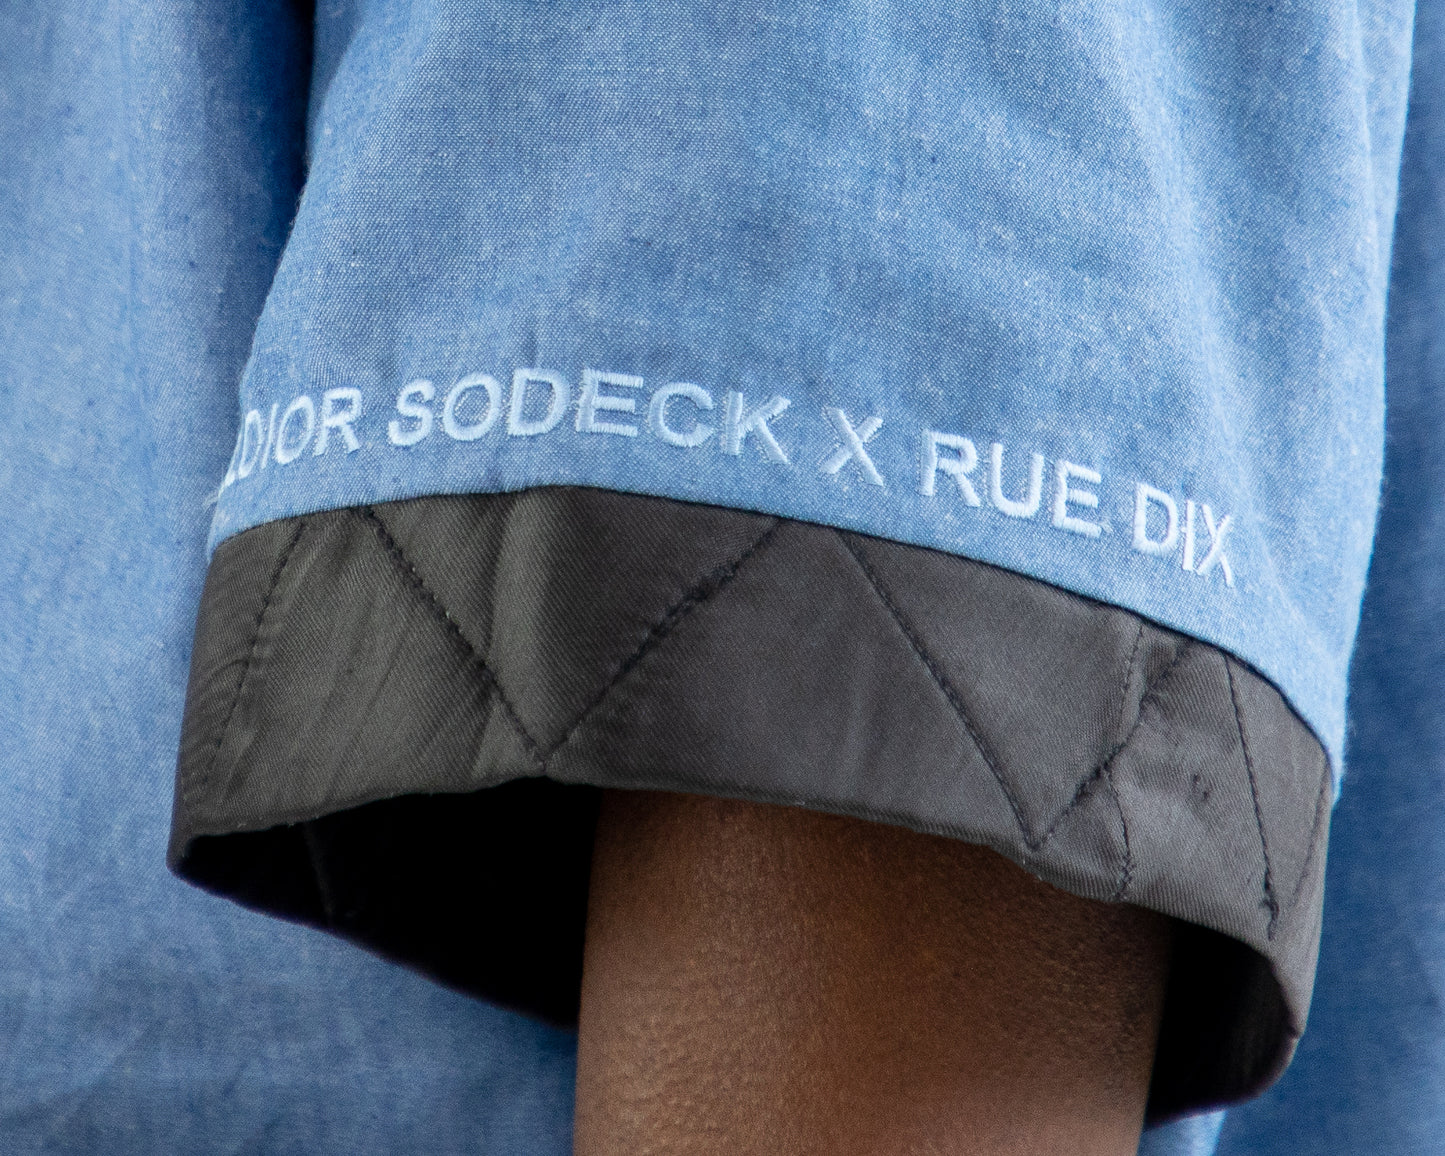 Eldior Sodeck x Rue Dix Diamond Reversible Cropped Jacket